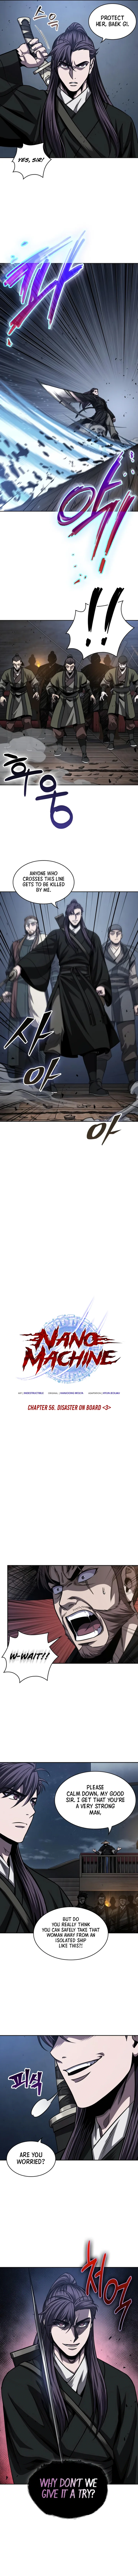 Nano Machine - Chapter 162 Page 3